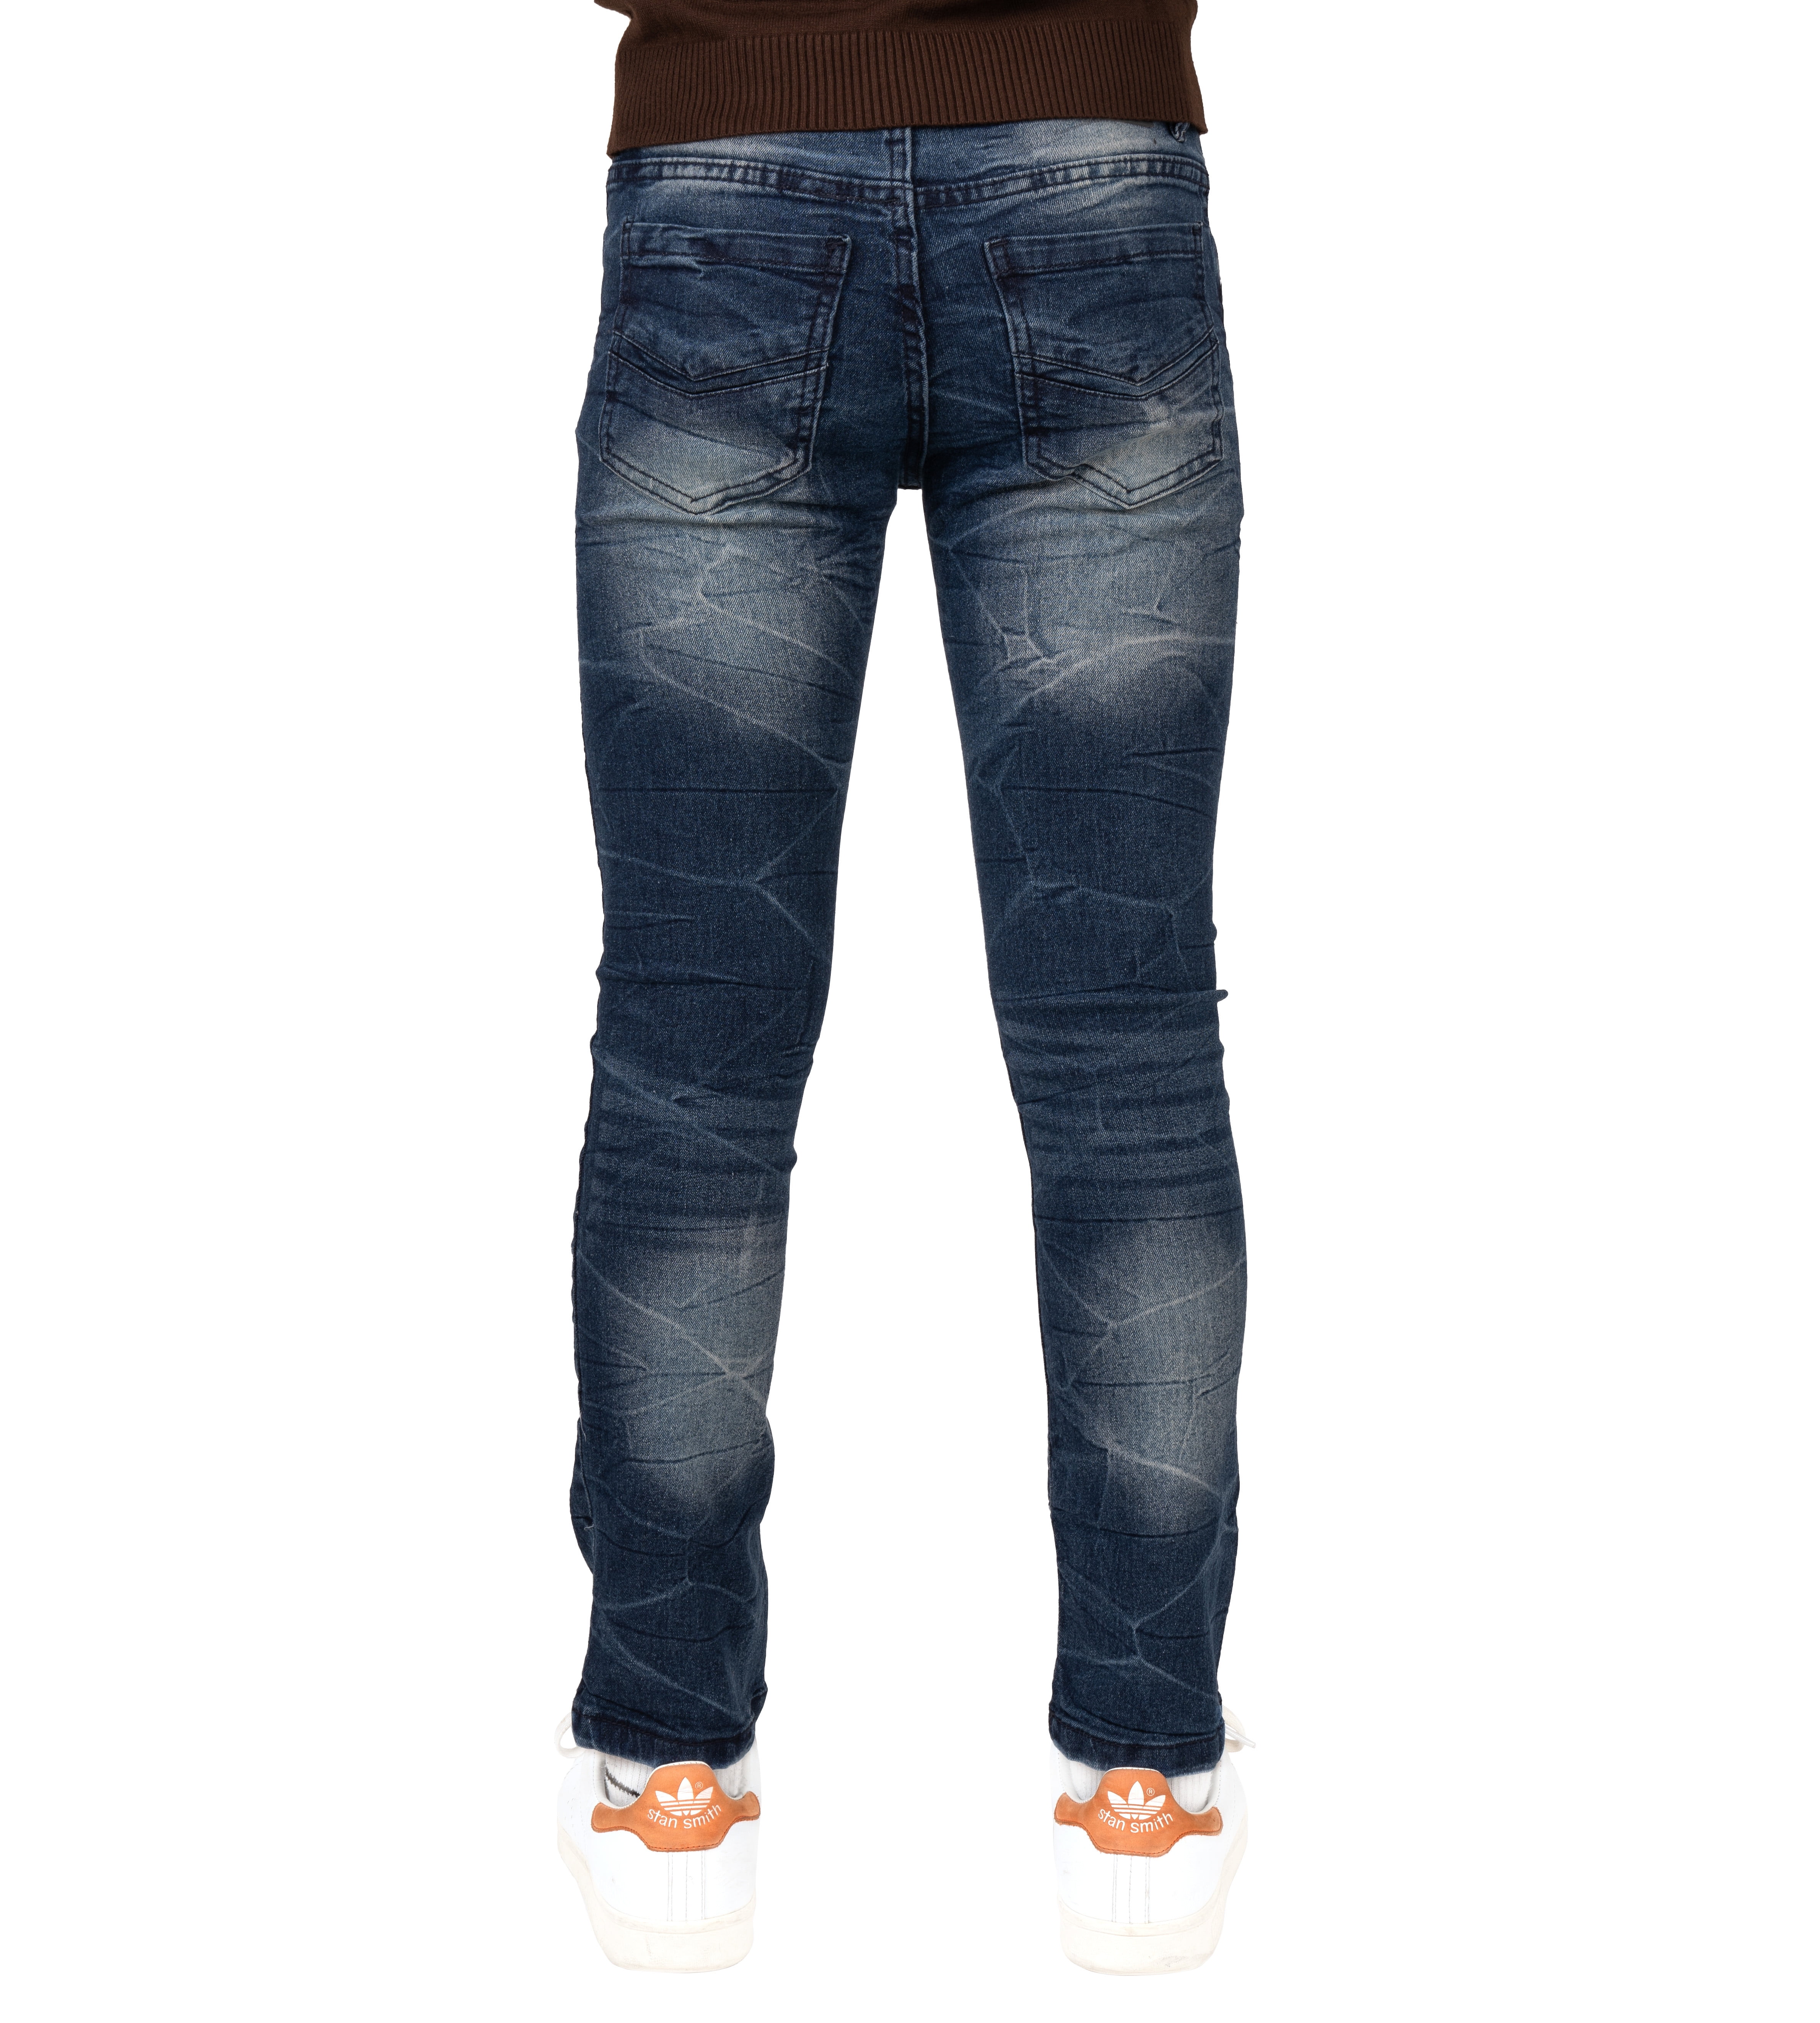 CULTURA Skinny Jeans for Boys Big Boys Teens Slim Wash Denim Pants, Medium  Blue - Copper Accent, Size 14